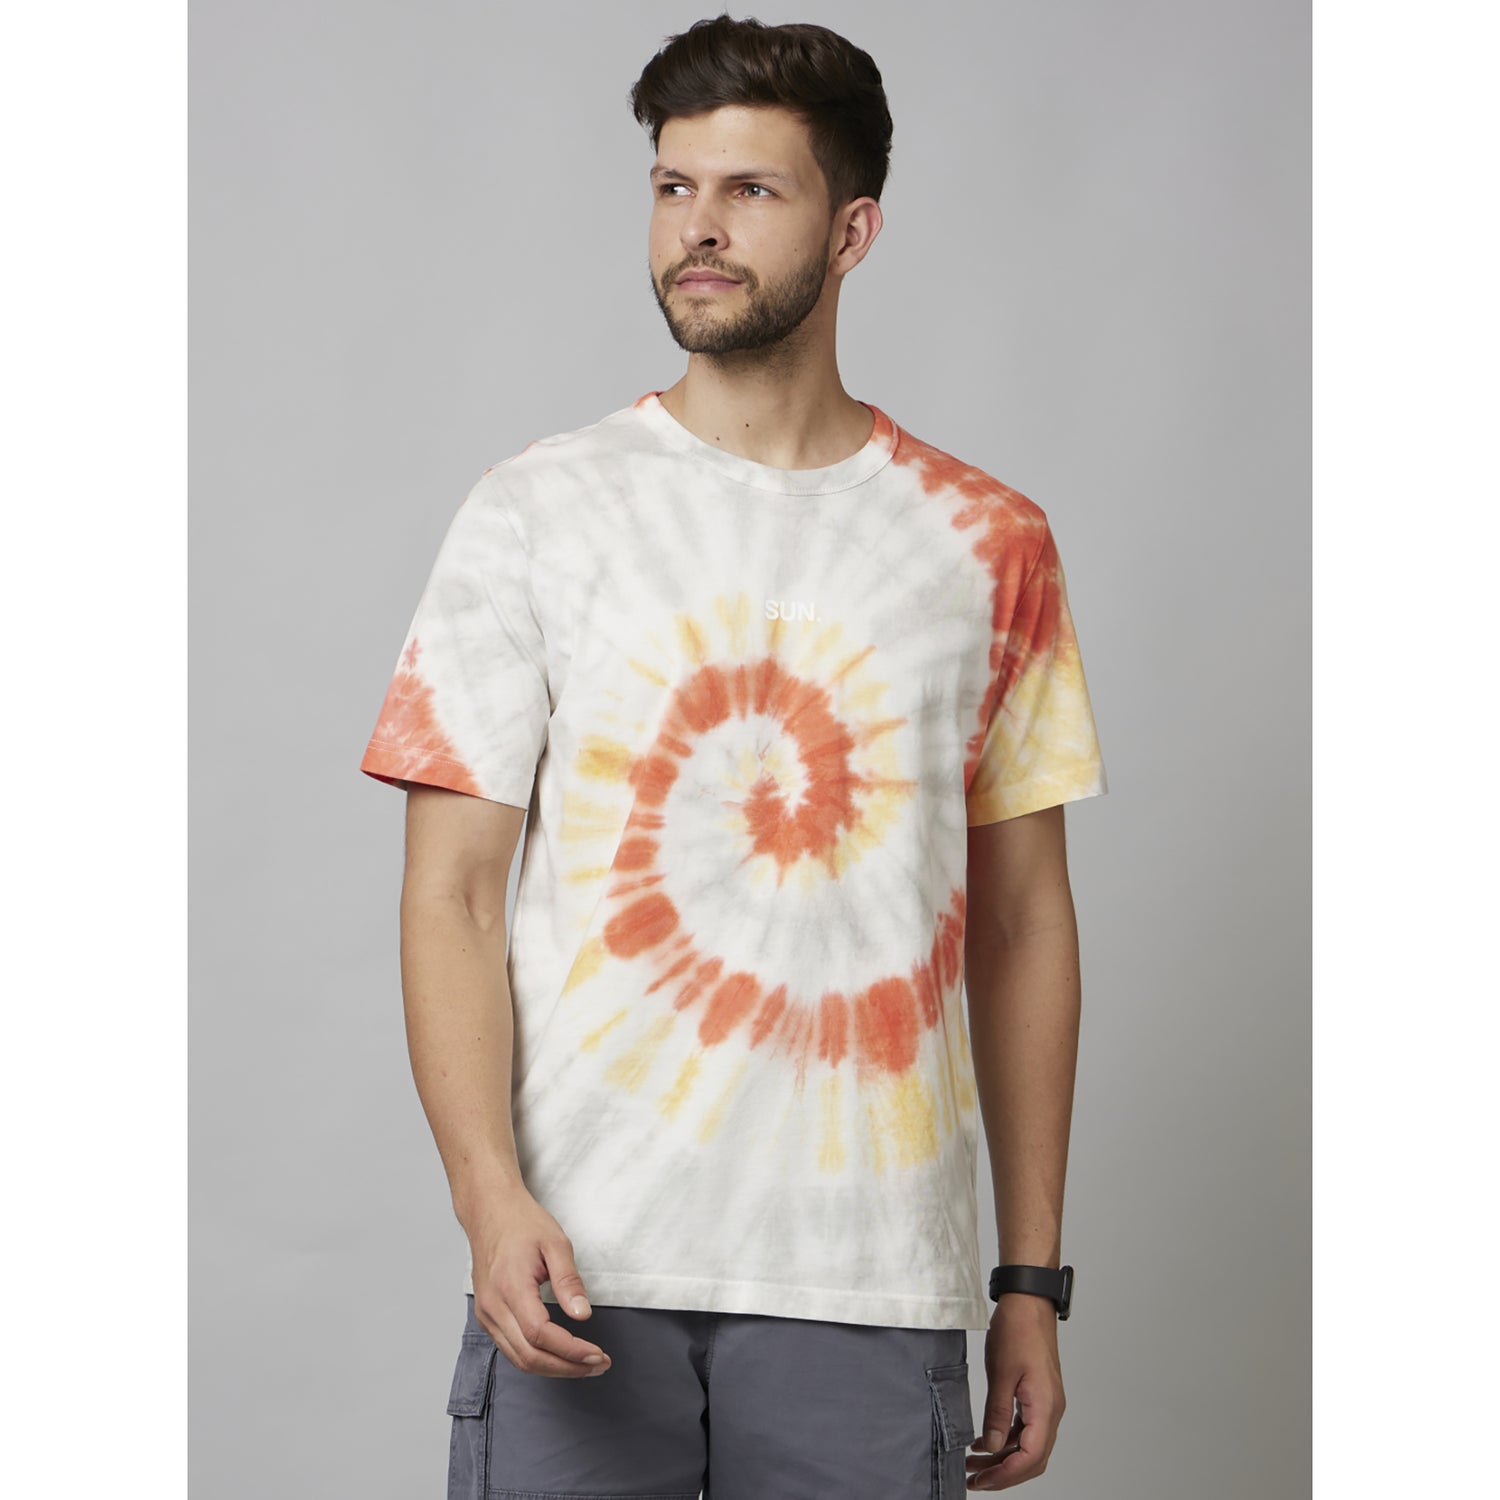 Orange Tie Dye Half Sleeve Cotton T-Shirts (FENAITRE)